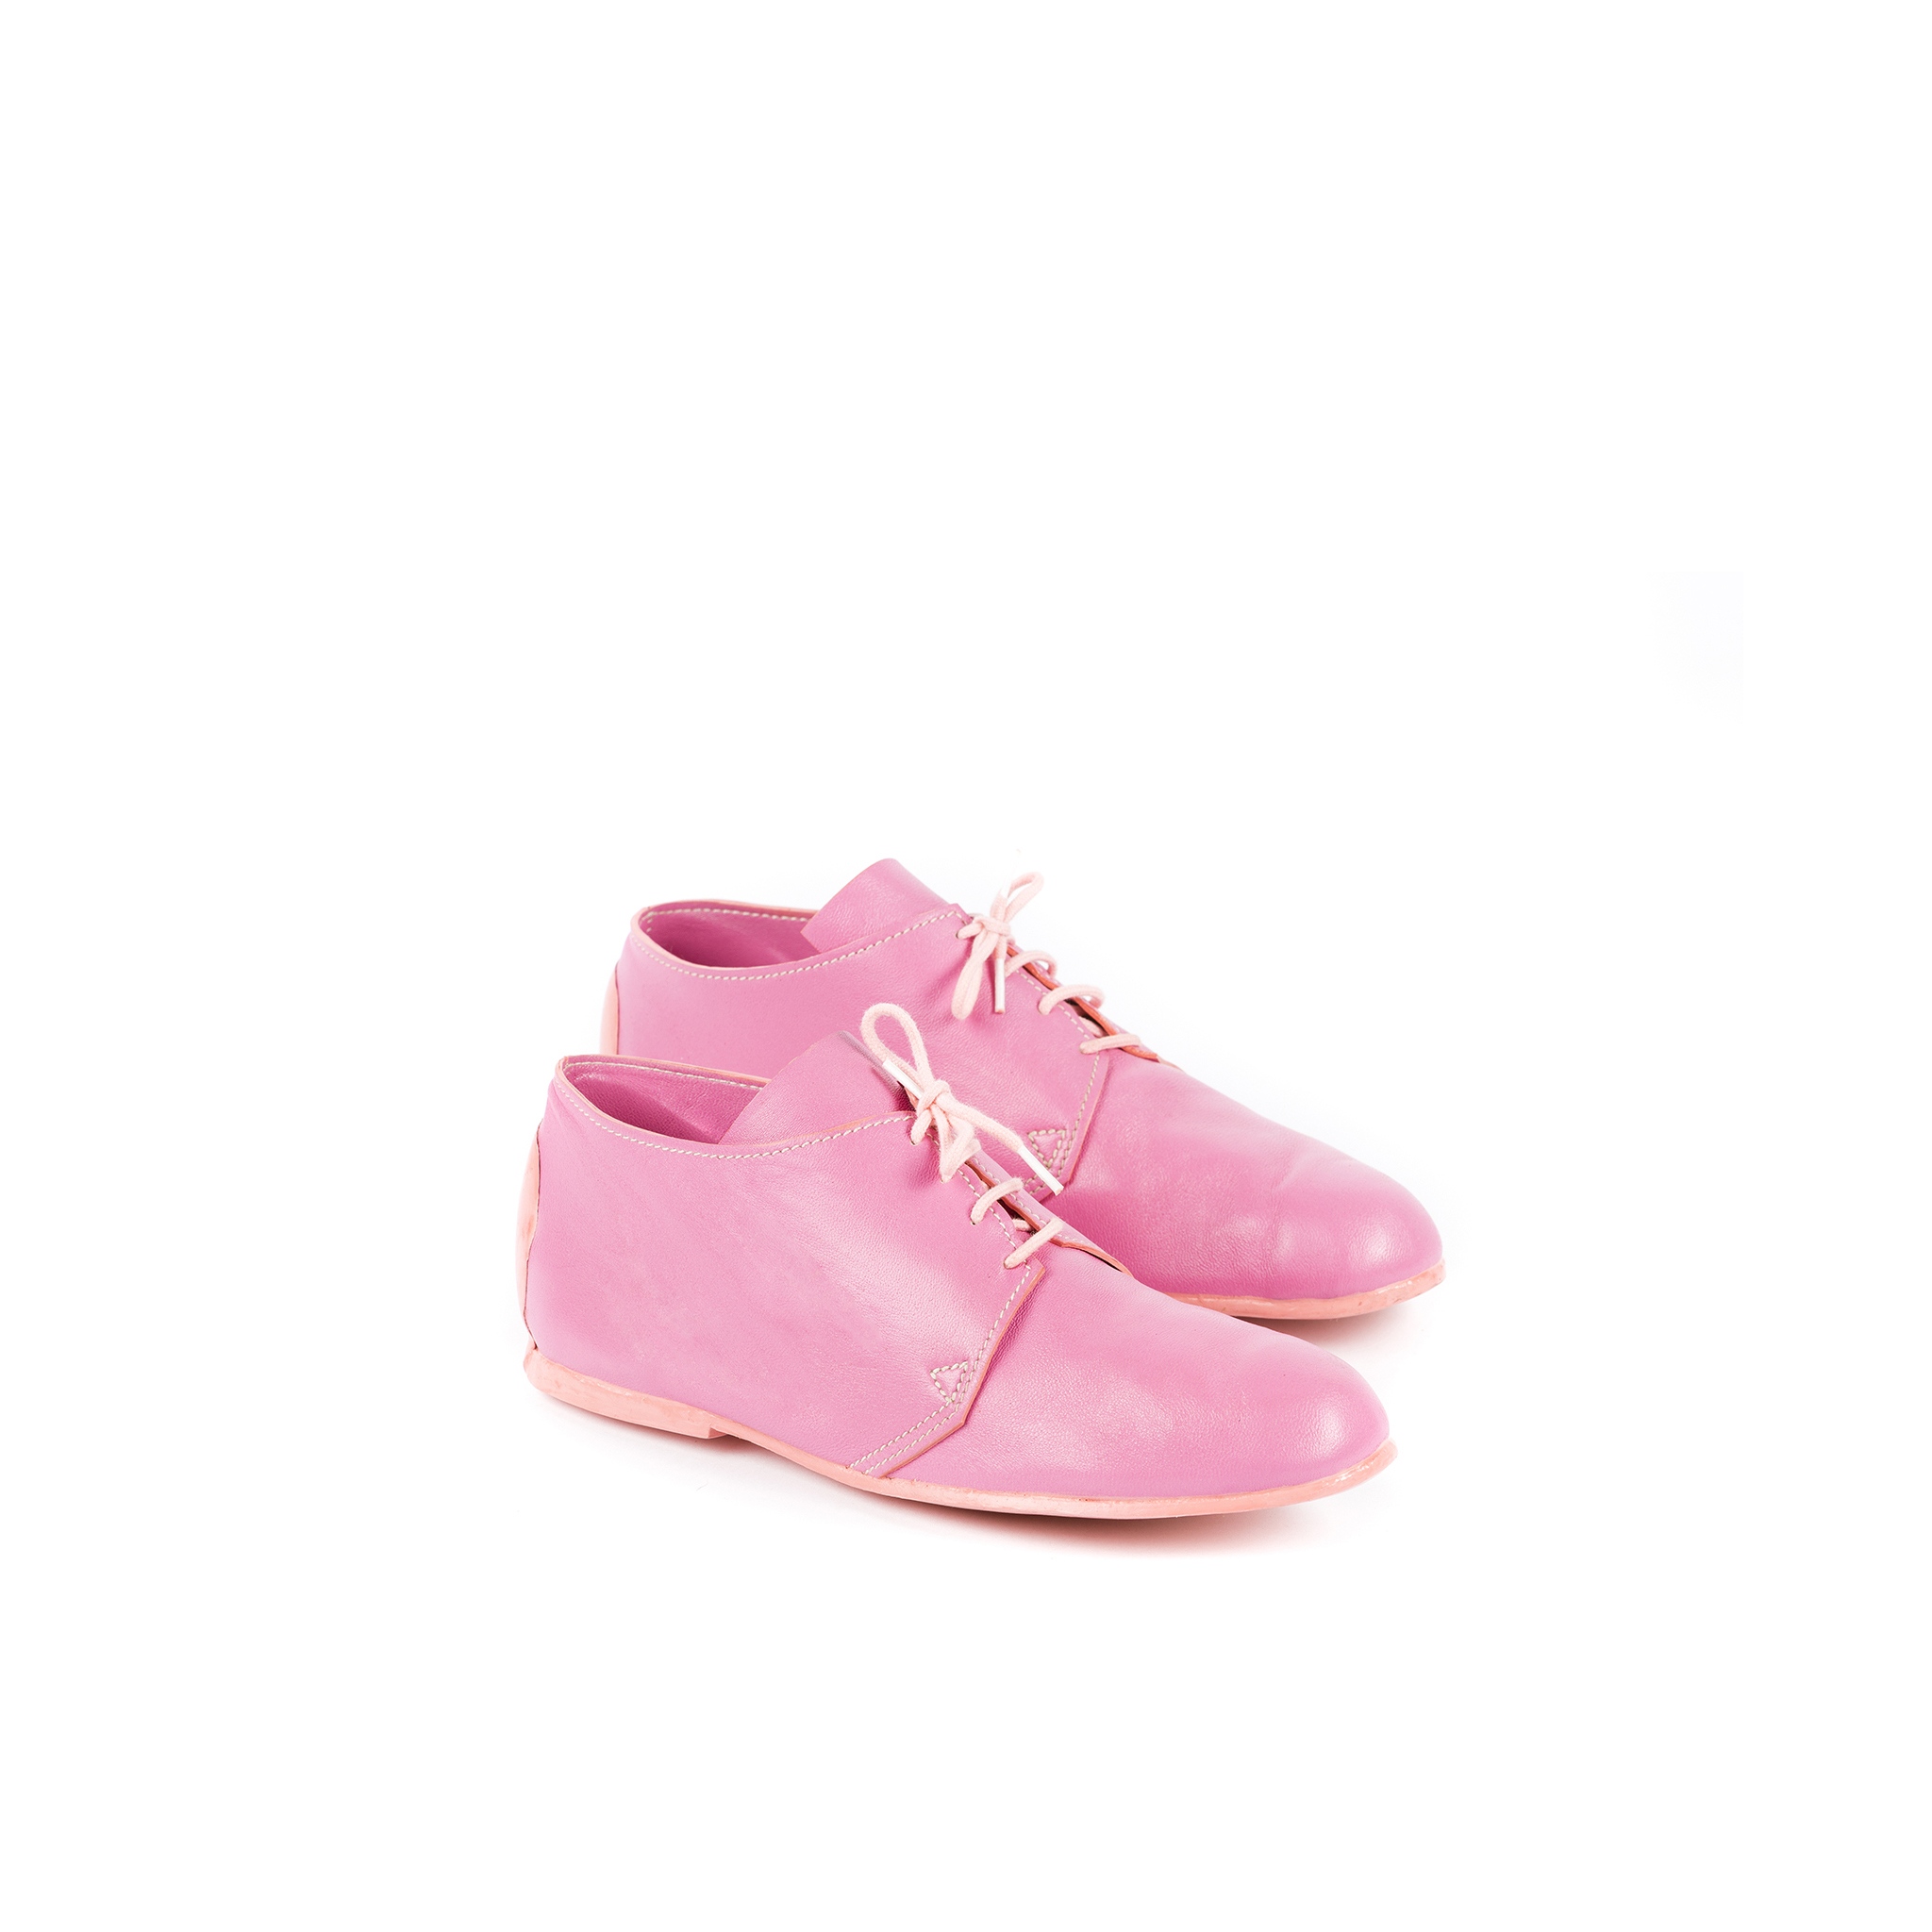 Chaussures Derby Titi - Cuir glacé - Couleur rose